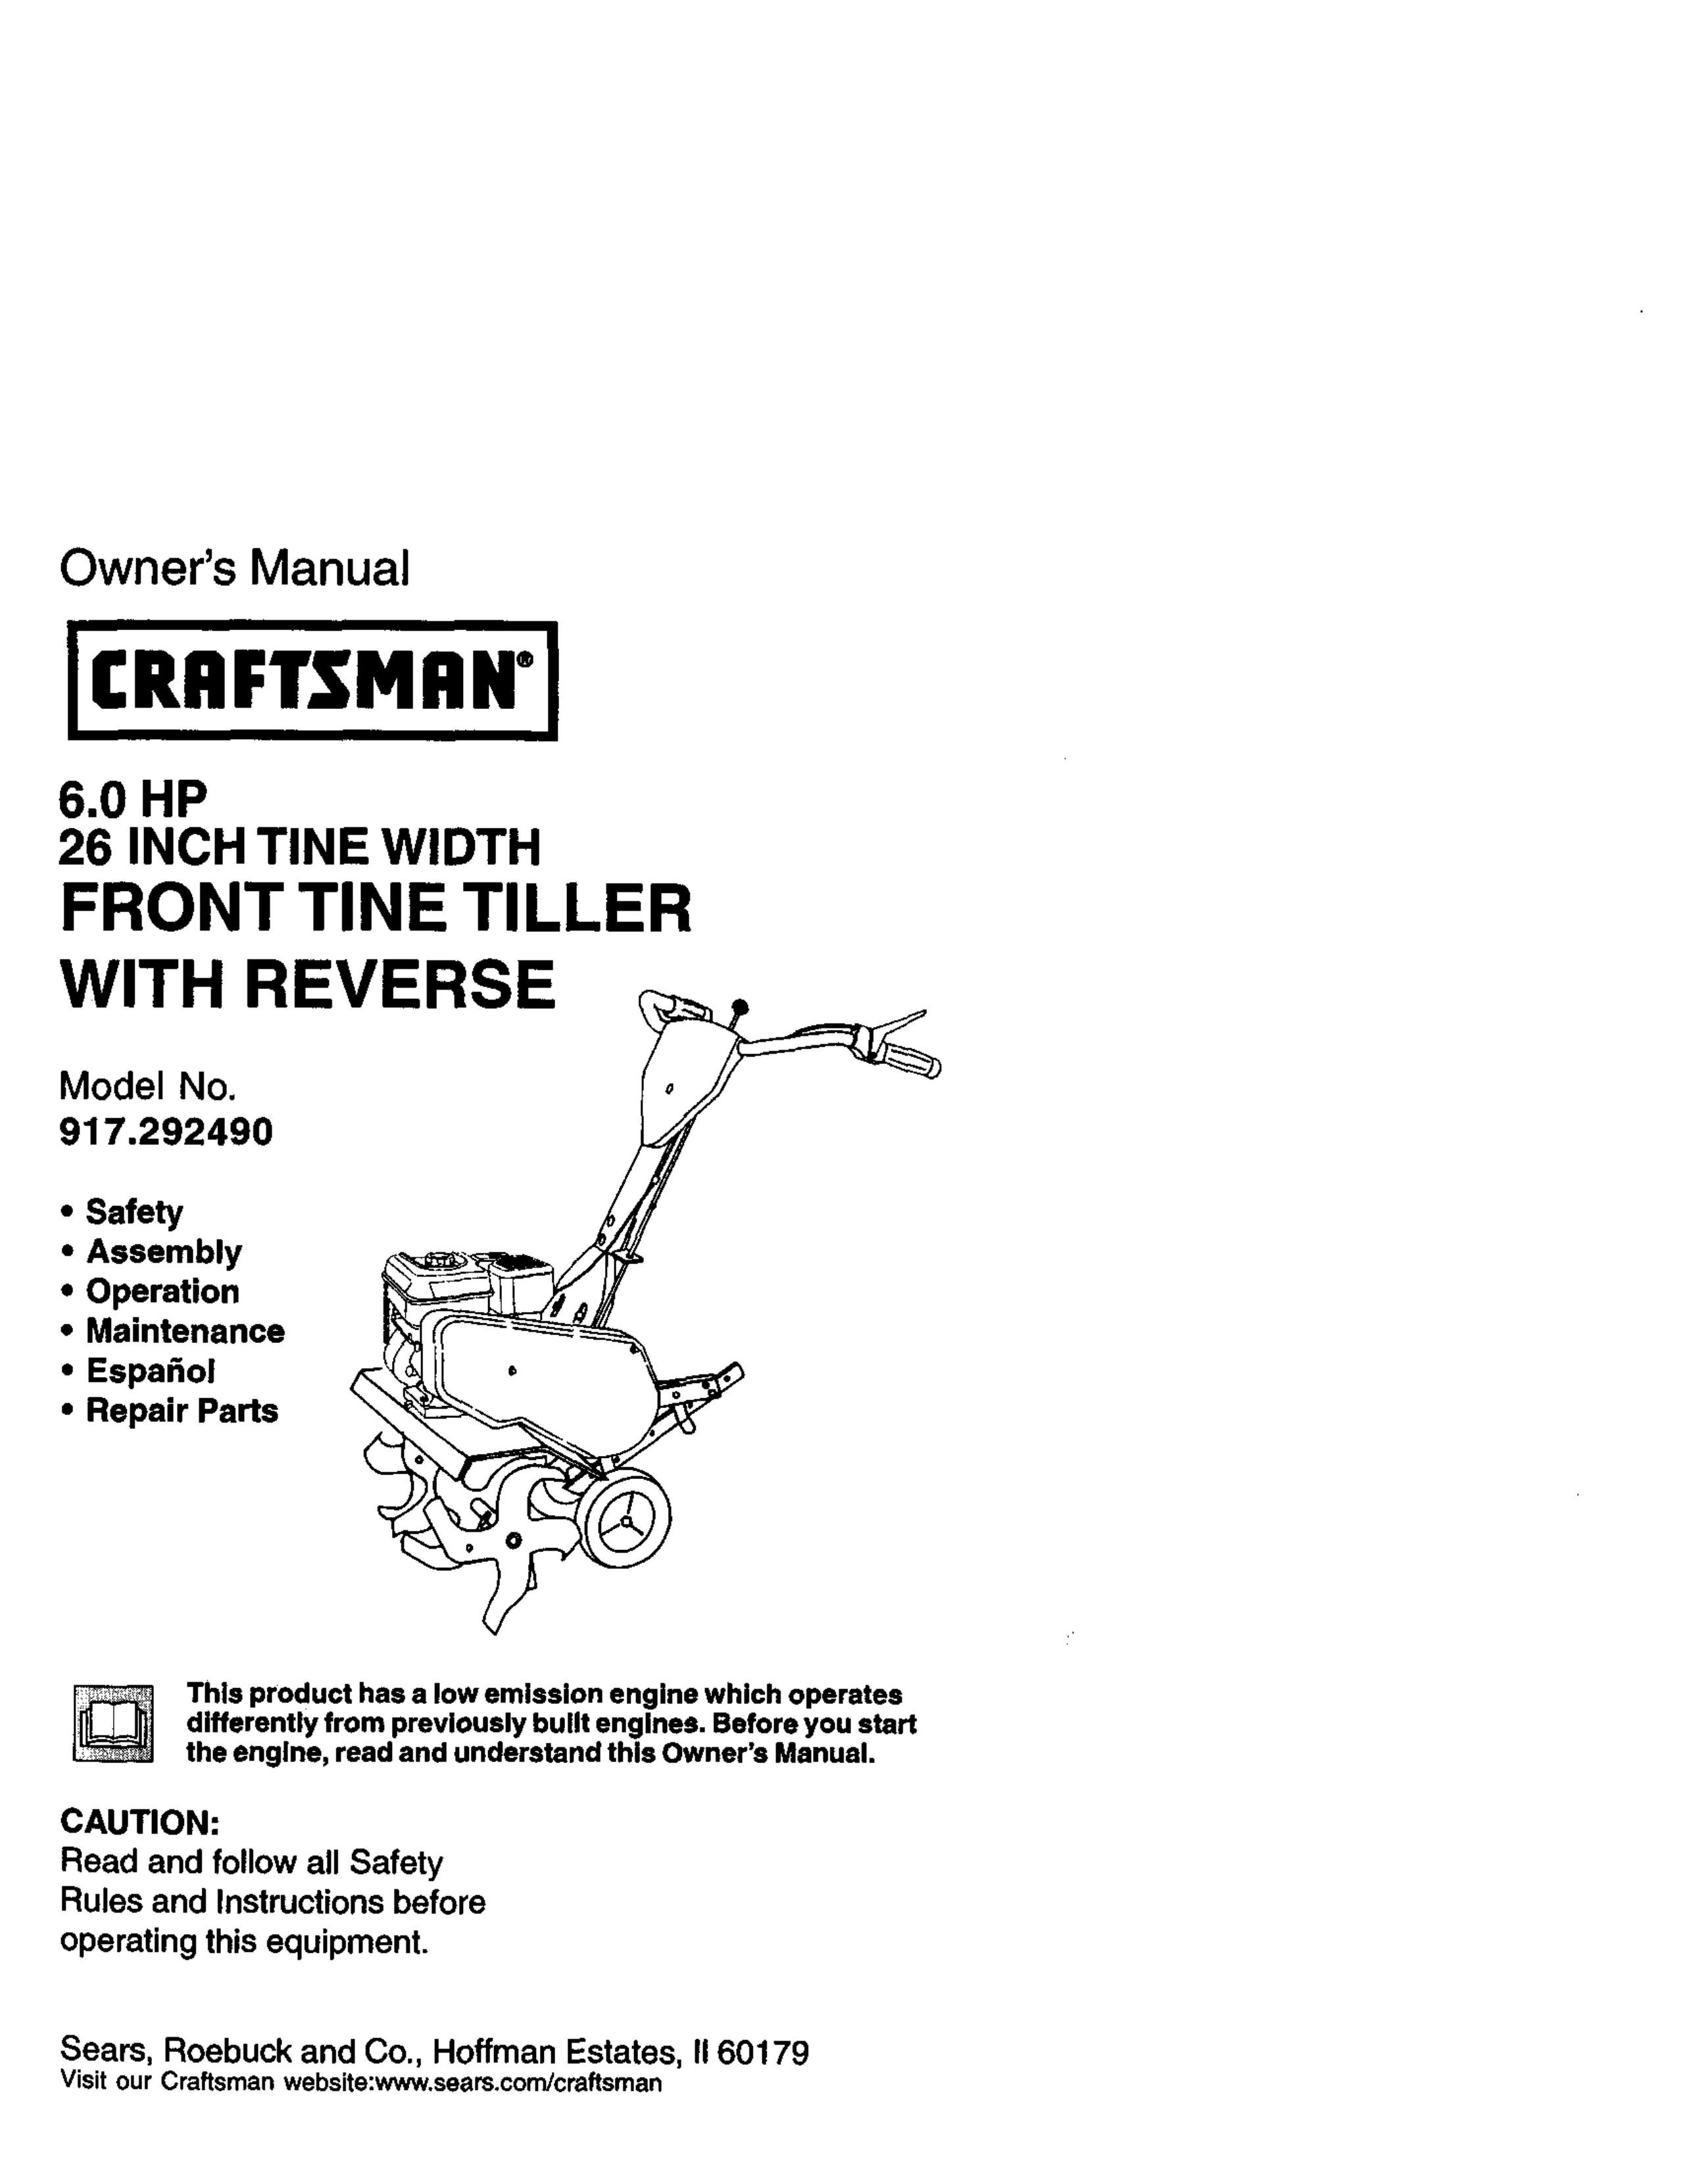 Craftsman 917.29249 Tiller User Manual